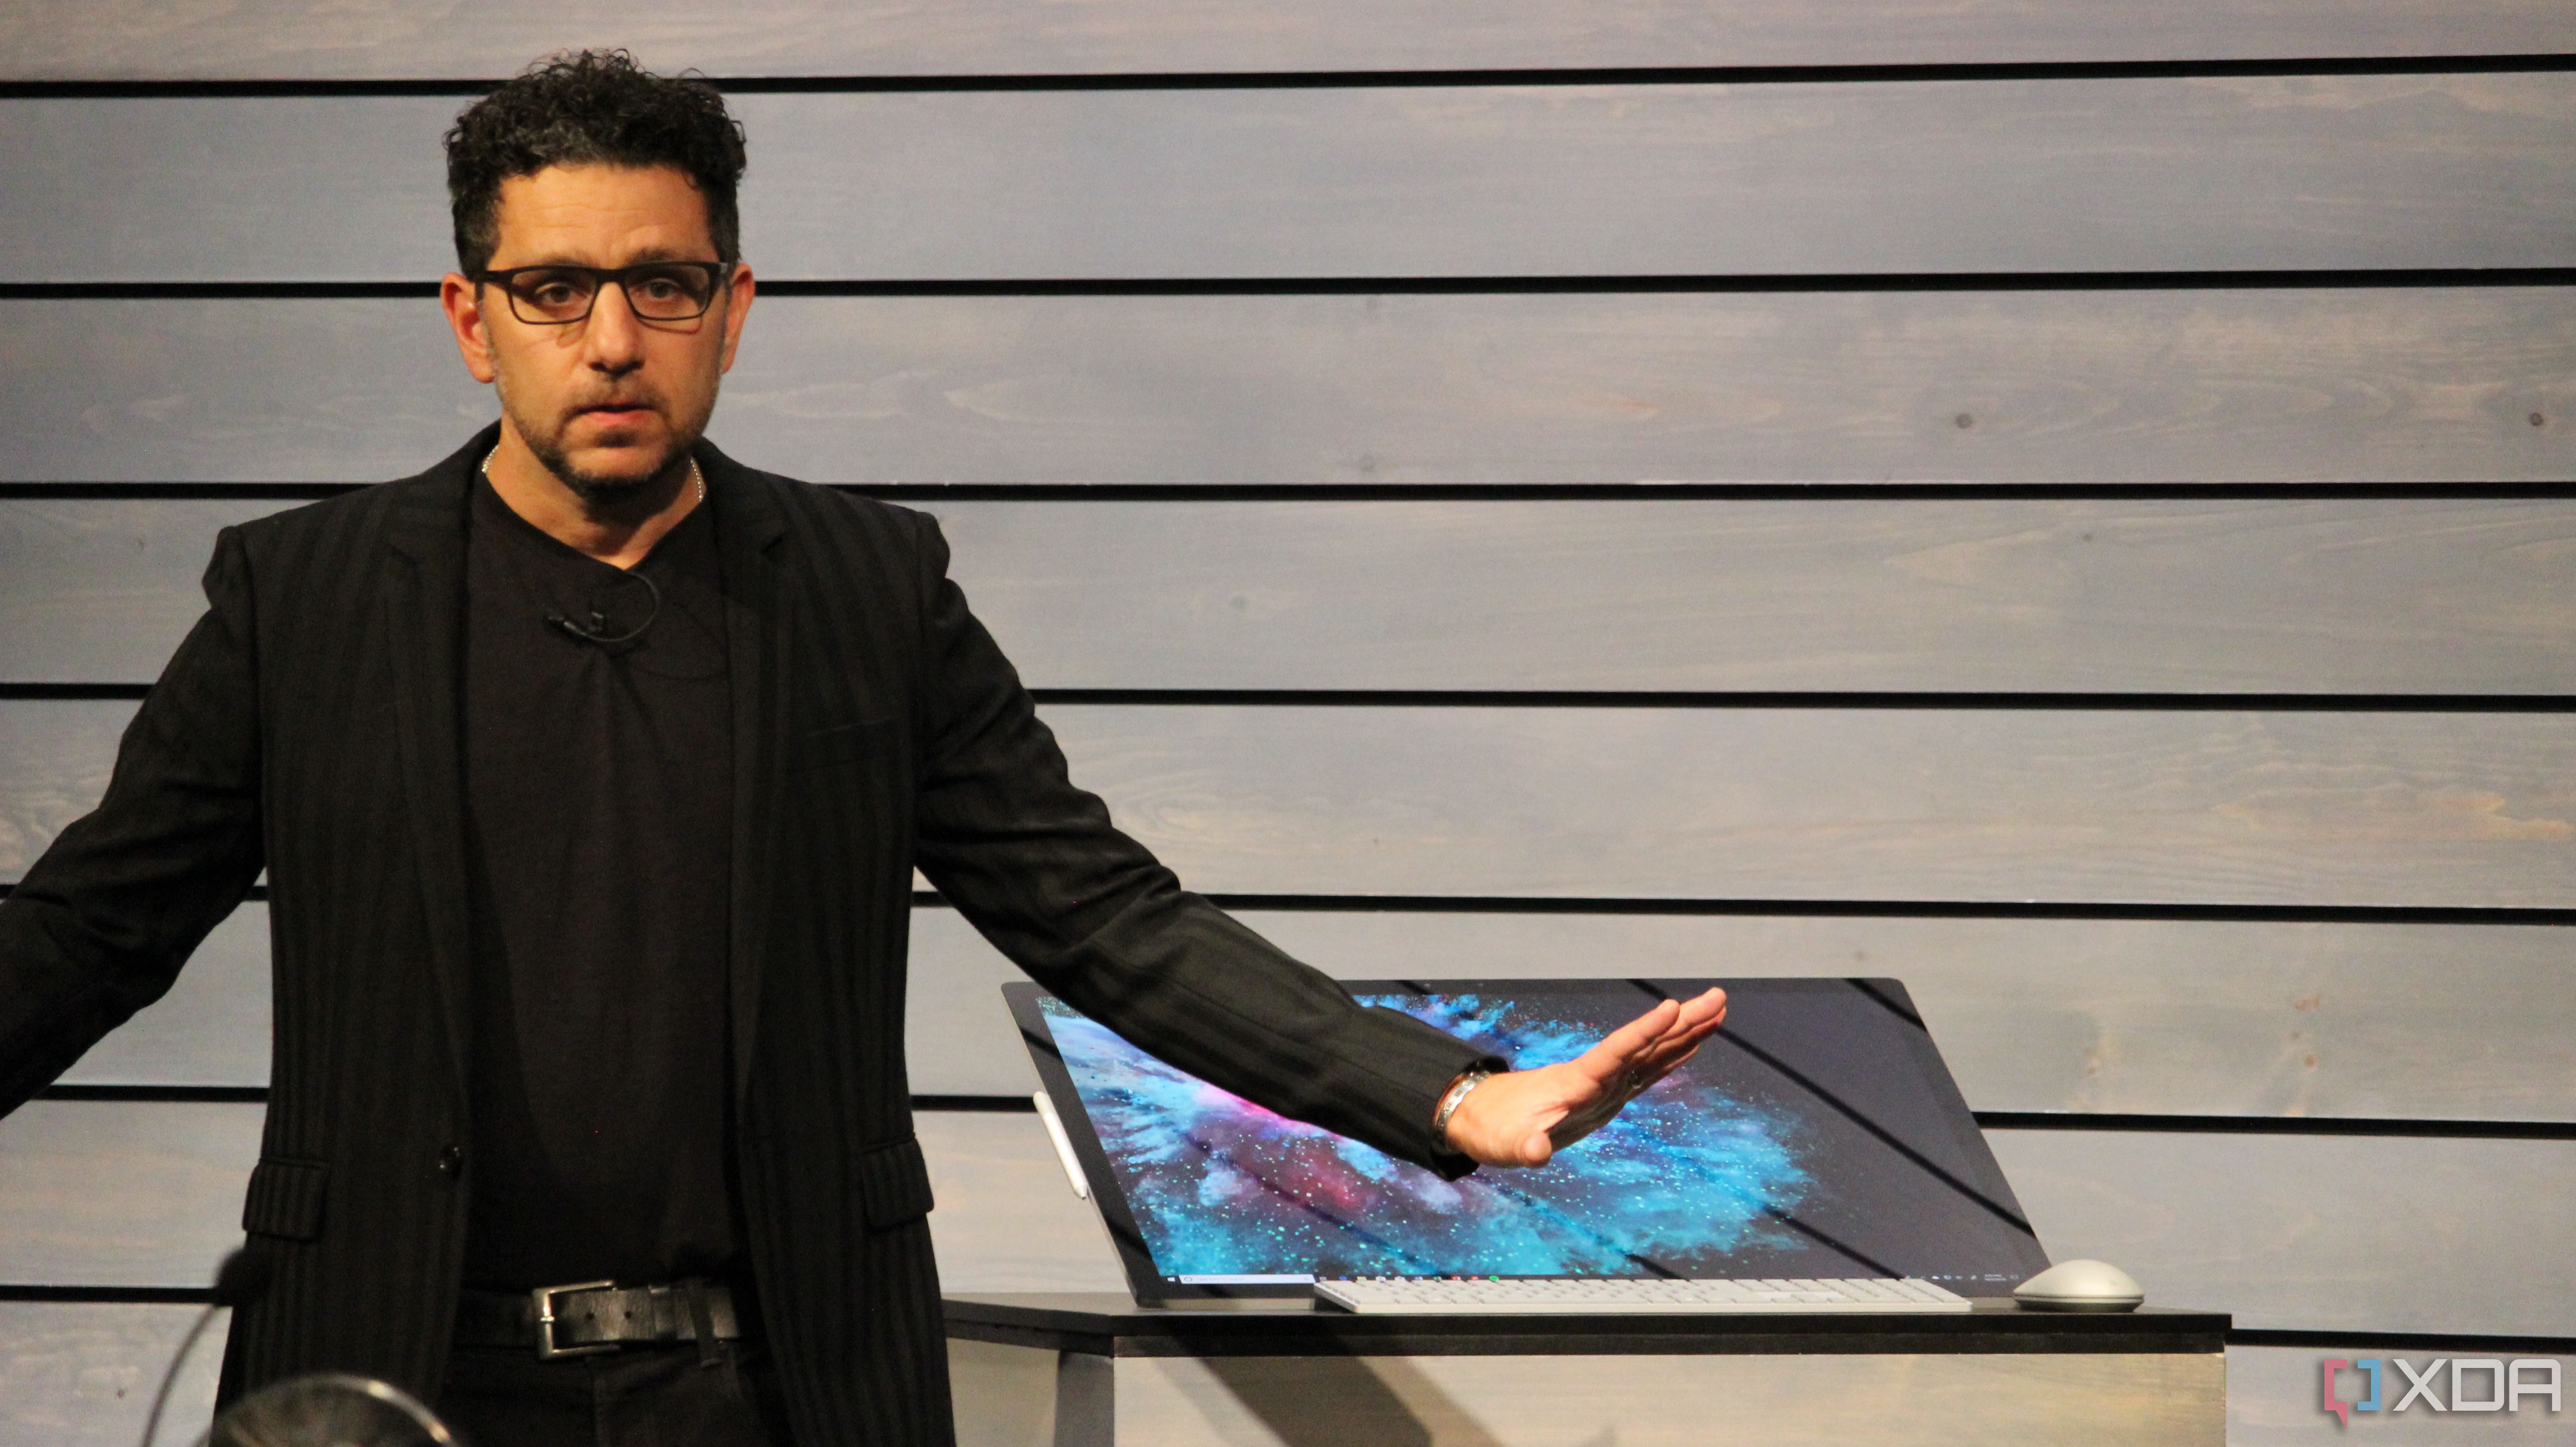 Panos Panay presenting the Surface Studio